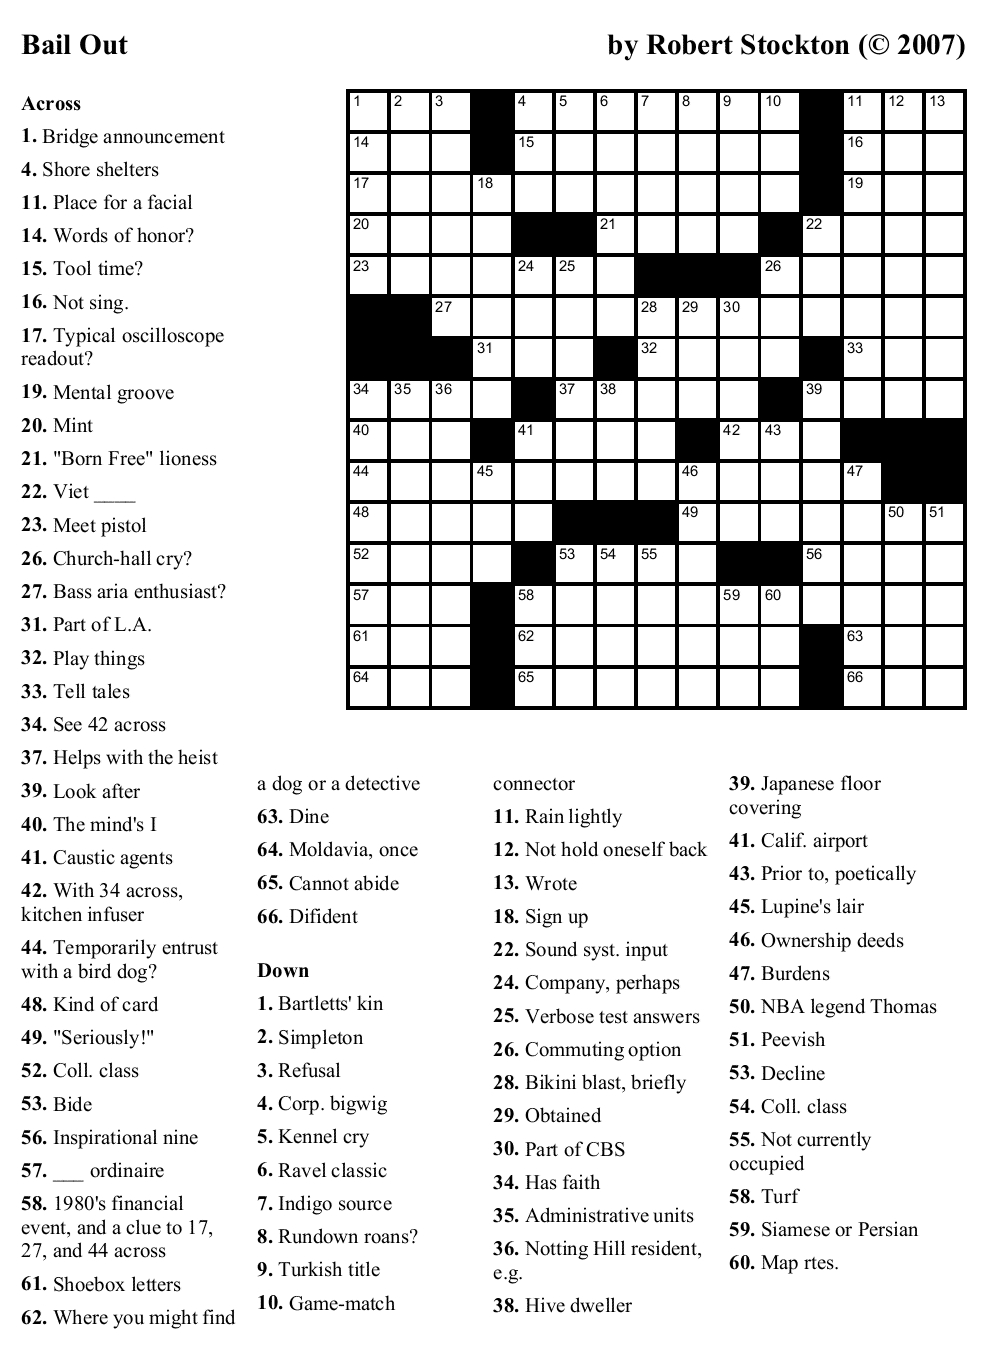 Beekeeper Crosswords - Free Printable Crossword Puzzle #7 Answers